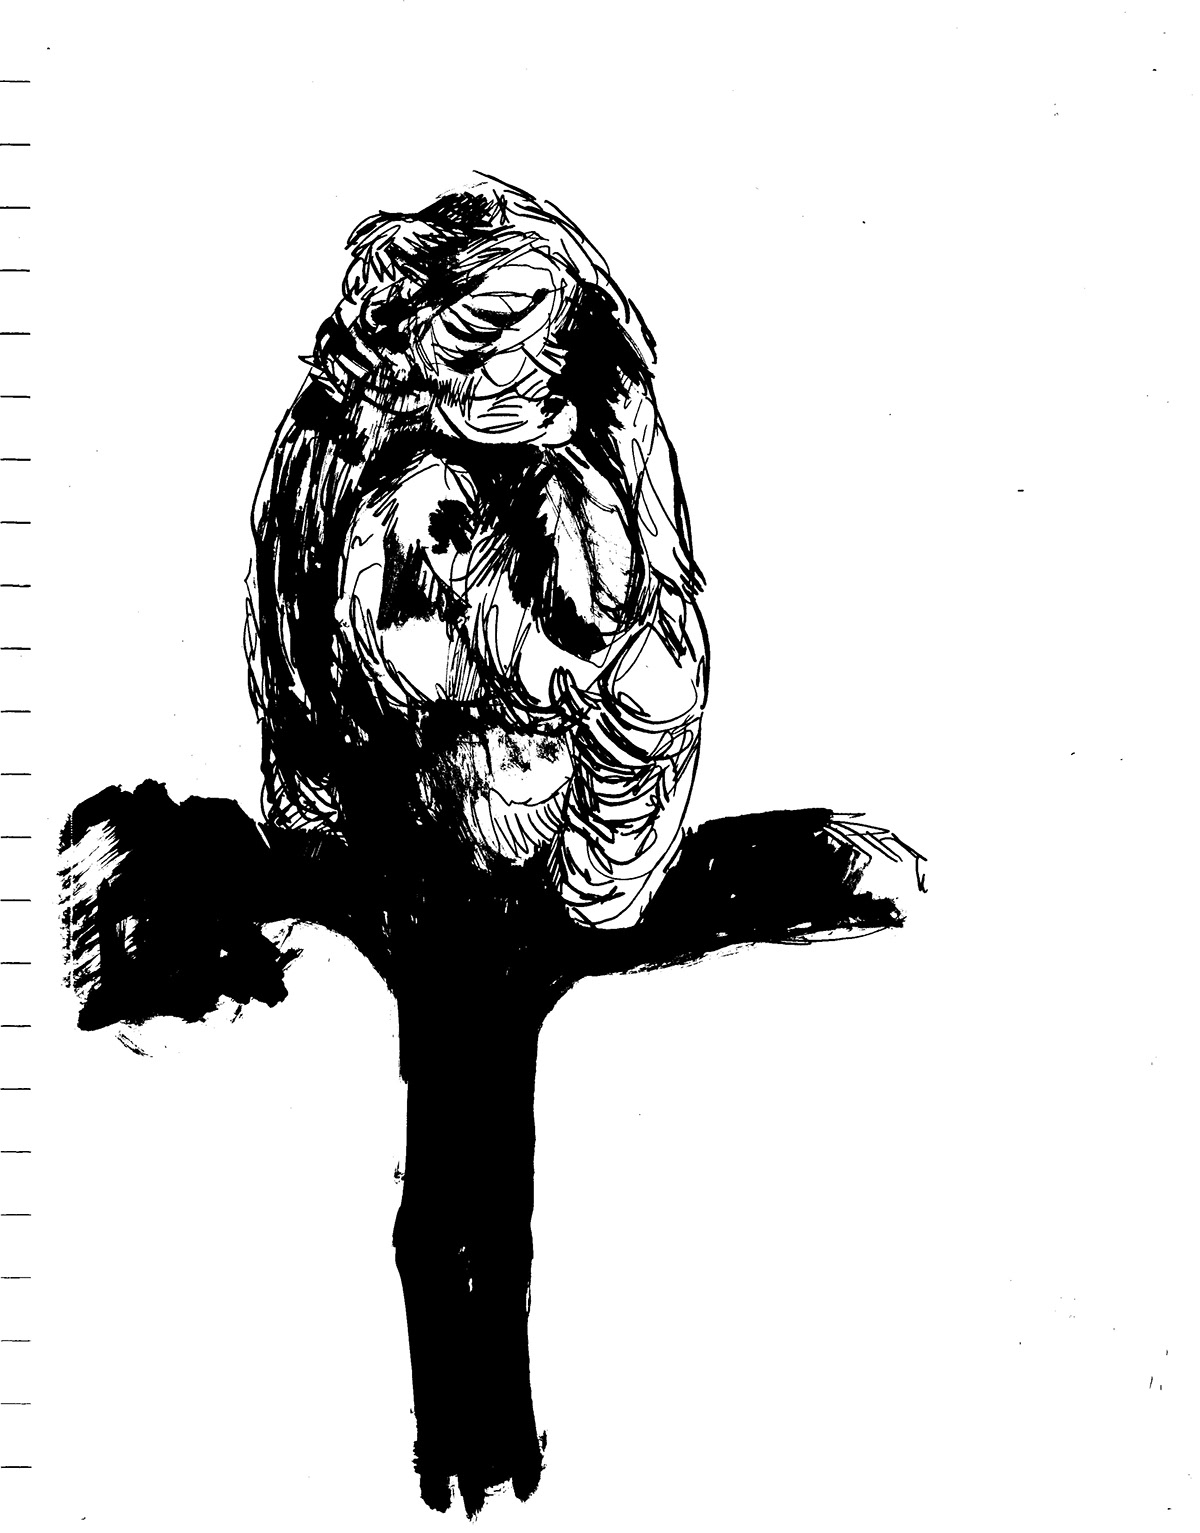 ink ink nib observational drawing art Visual Development owls birds animals narrative portrait wildlife stuffed